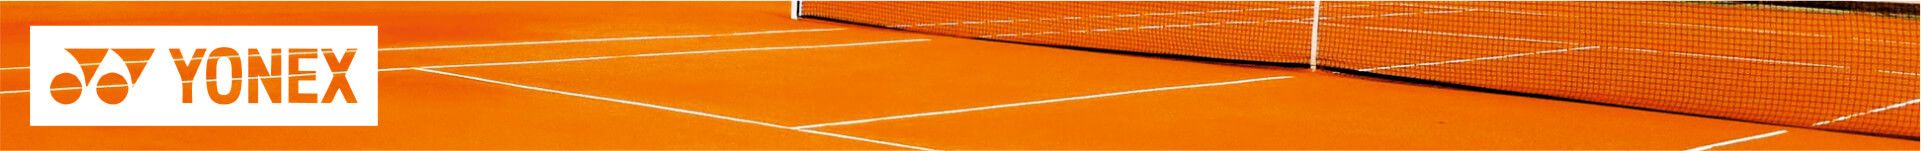 Racchette Yonex - Tennis Corner